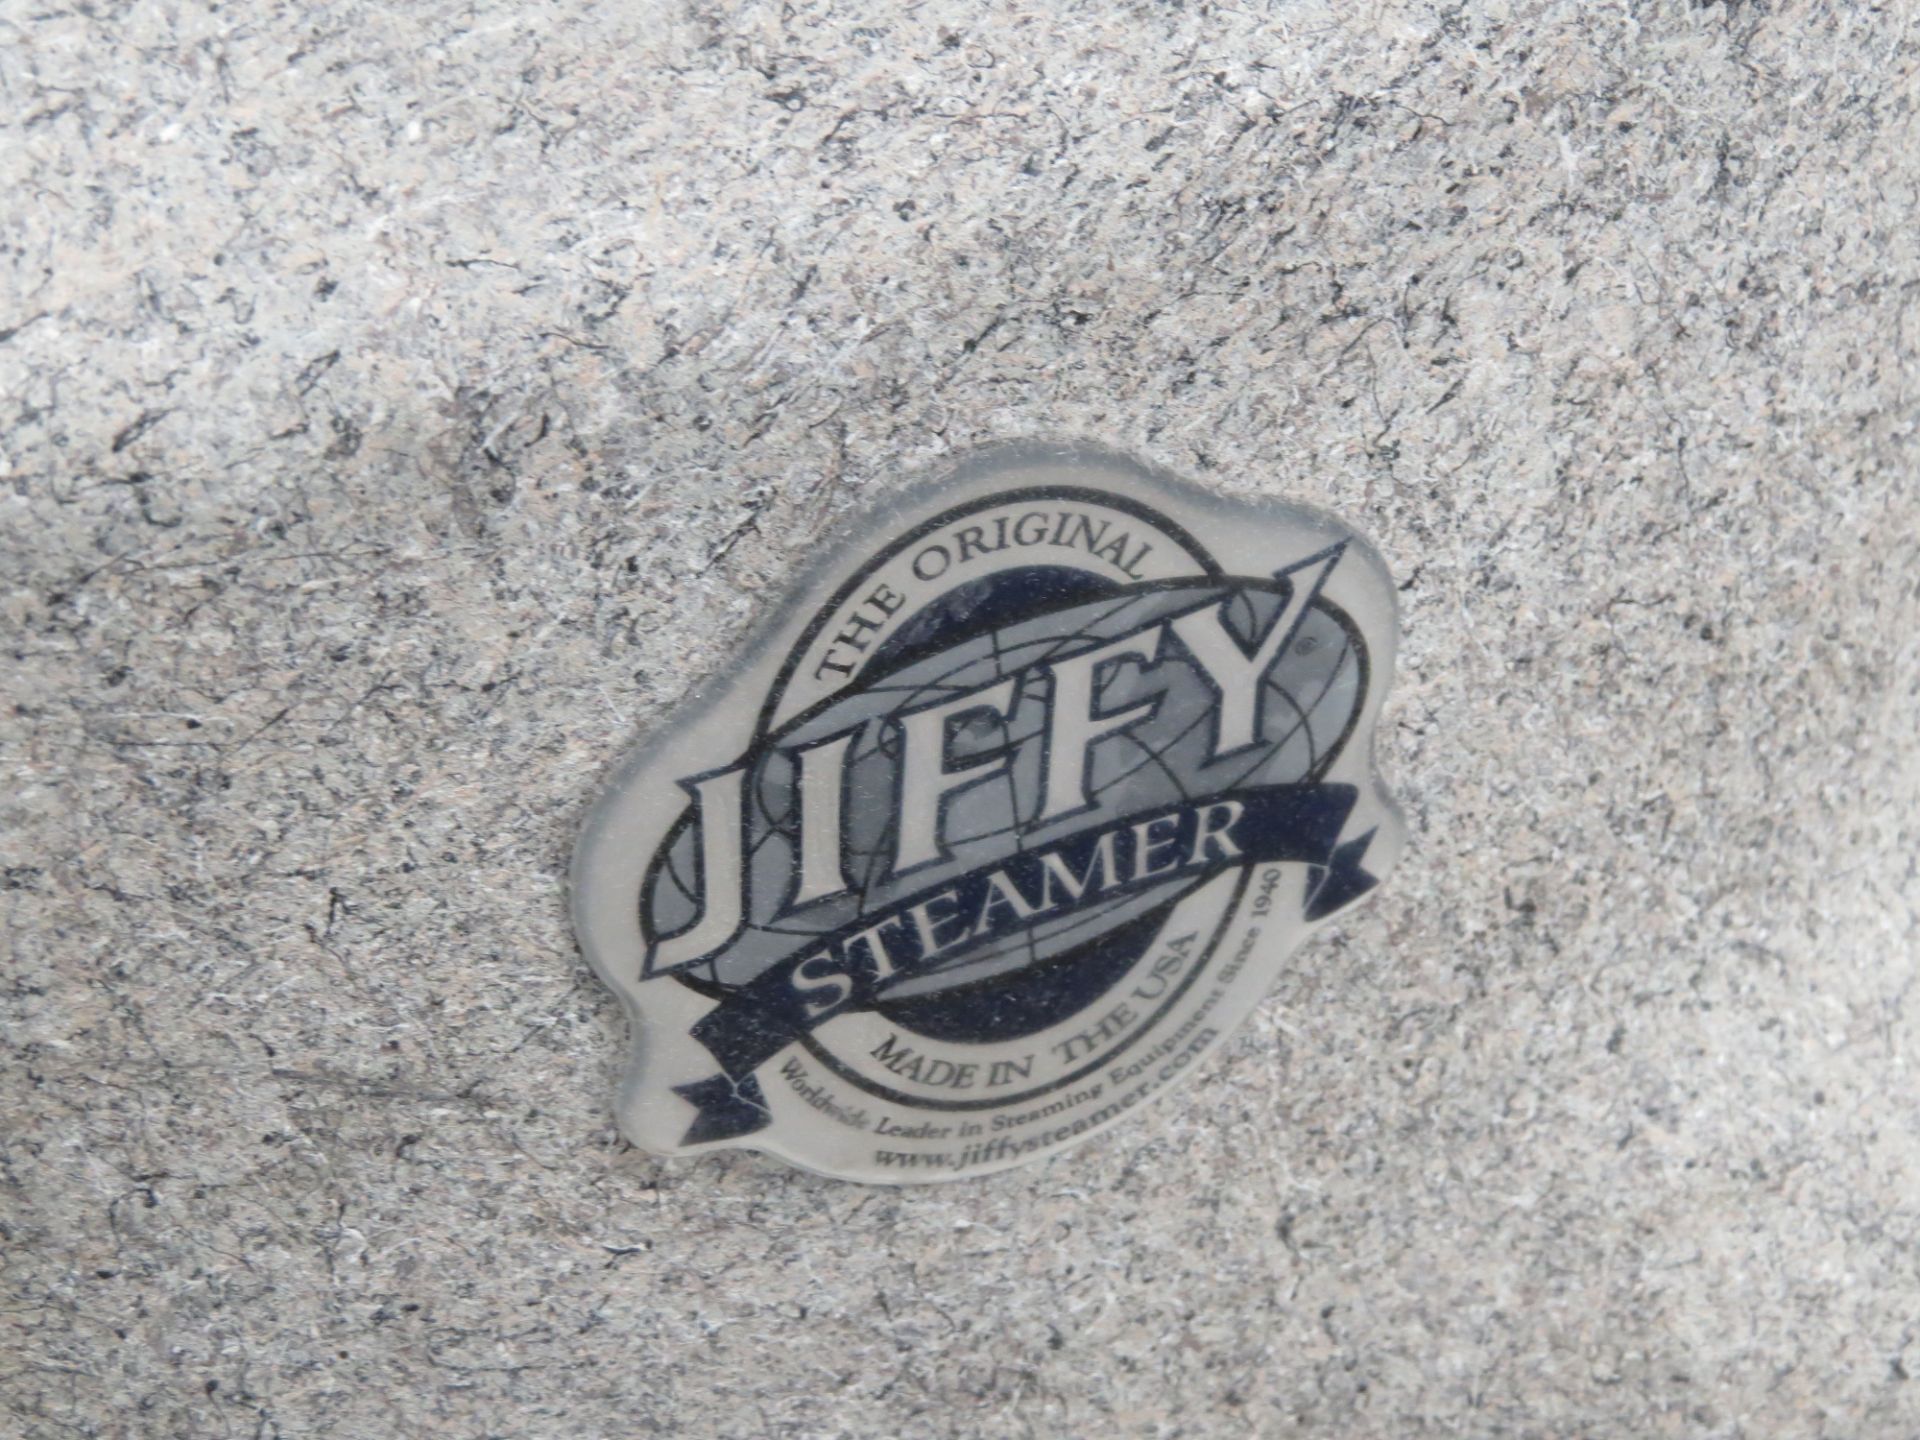 Jiffy steamer - Image 2 of 2